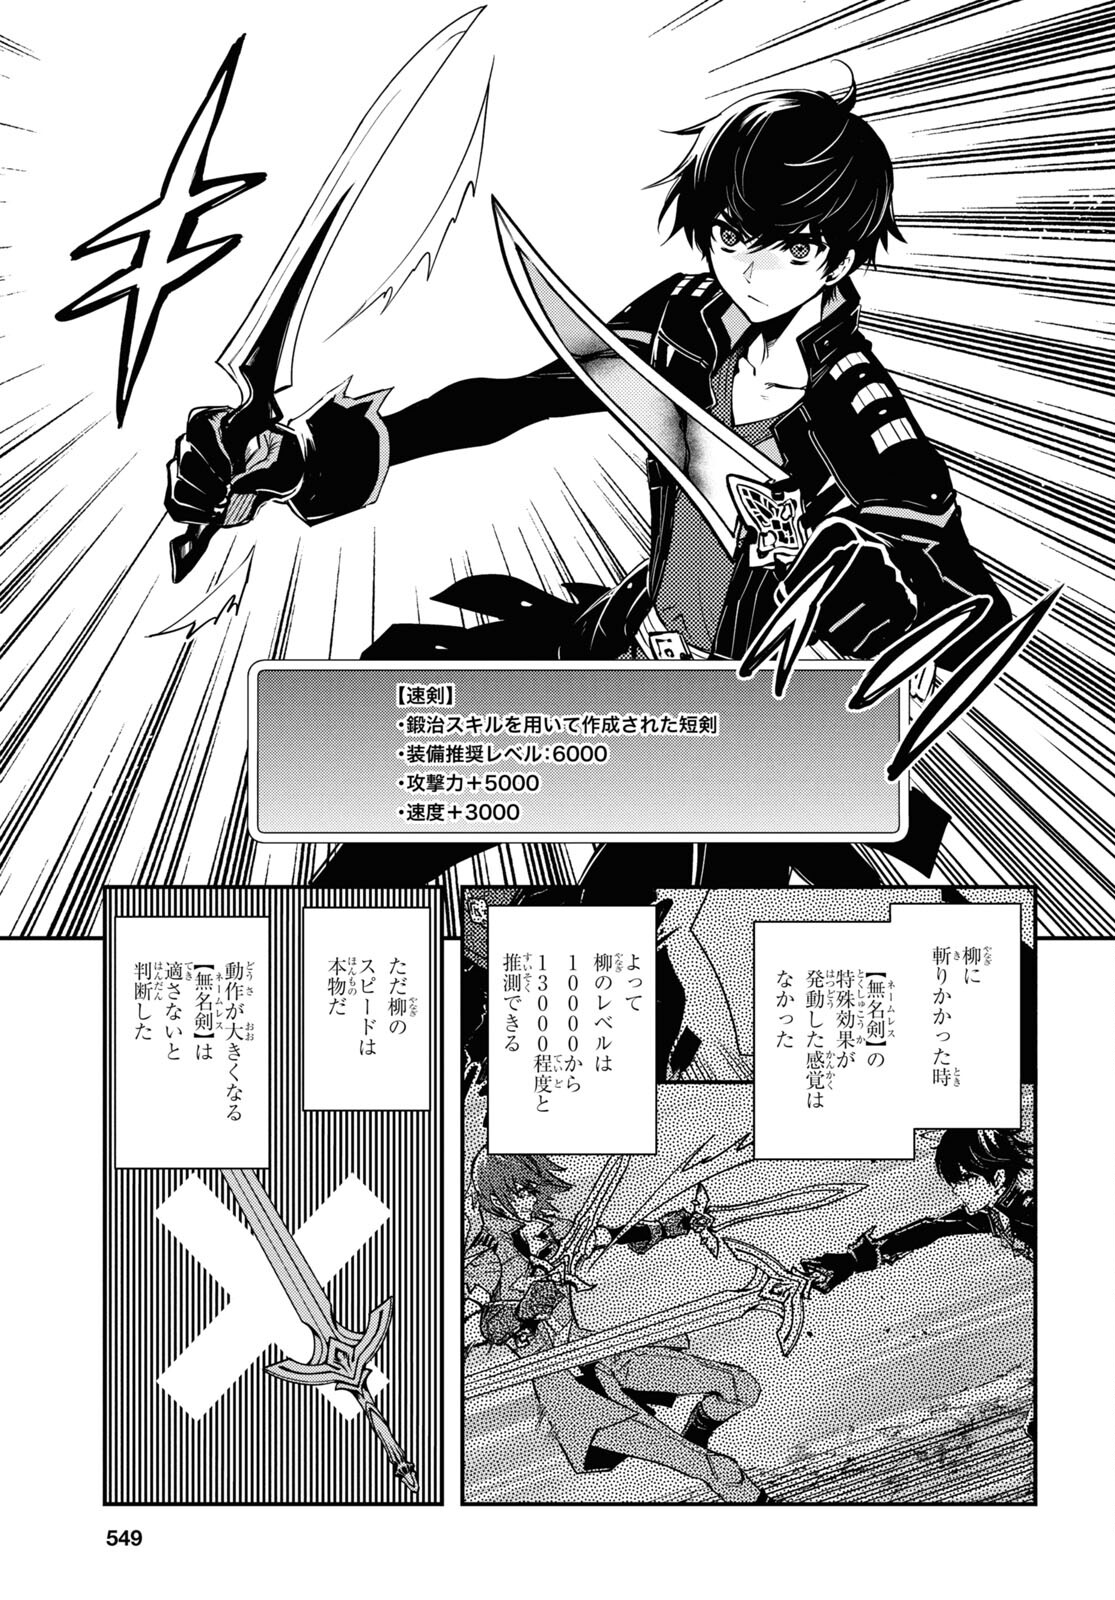 Sekai Saisoku no Level Up! - Chapter 33 - Page 3